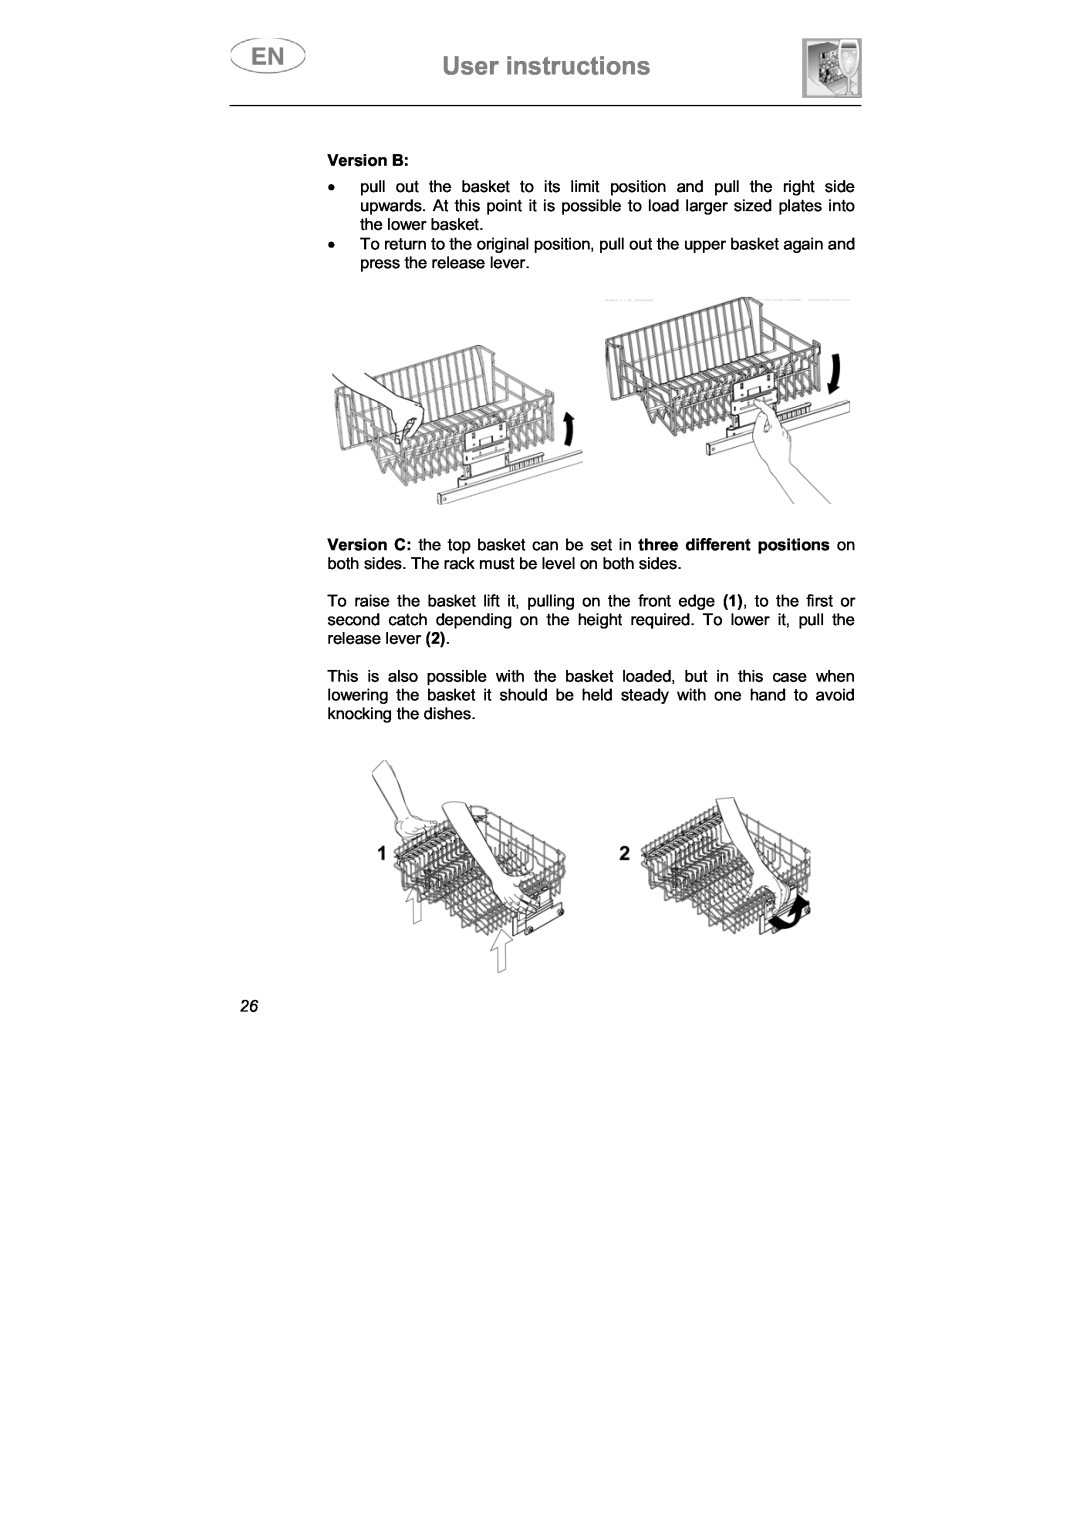 Smeg LSPX1253 manual User instructions, Version B 